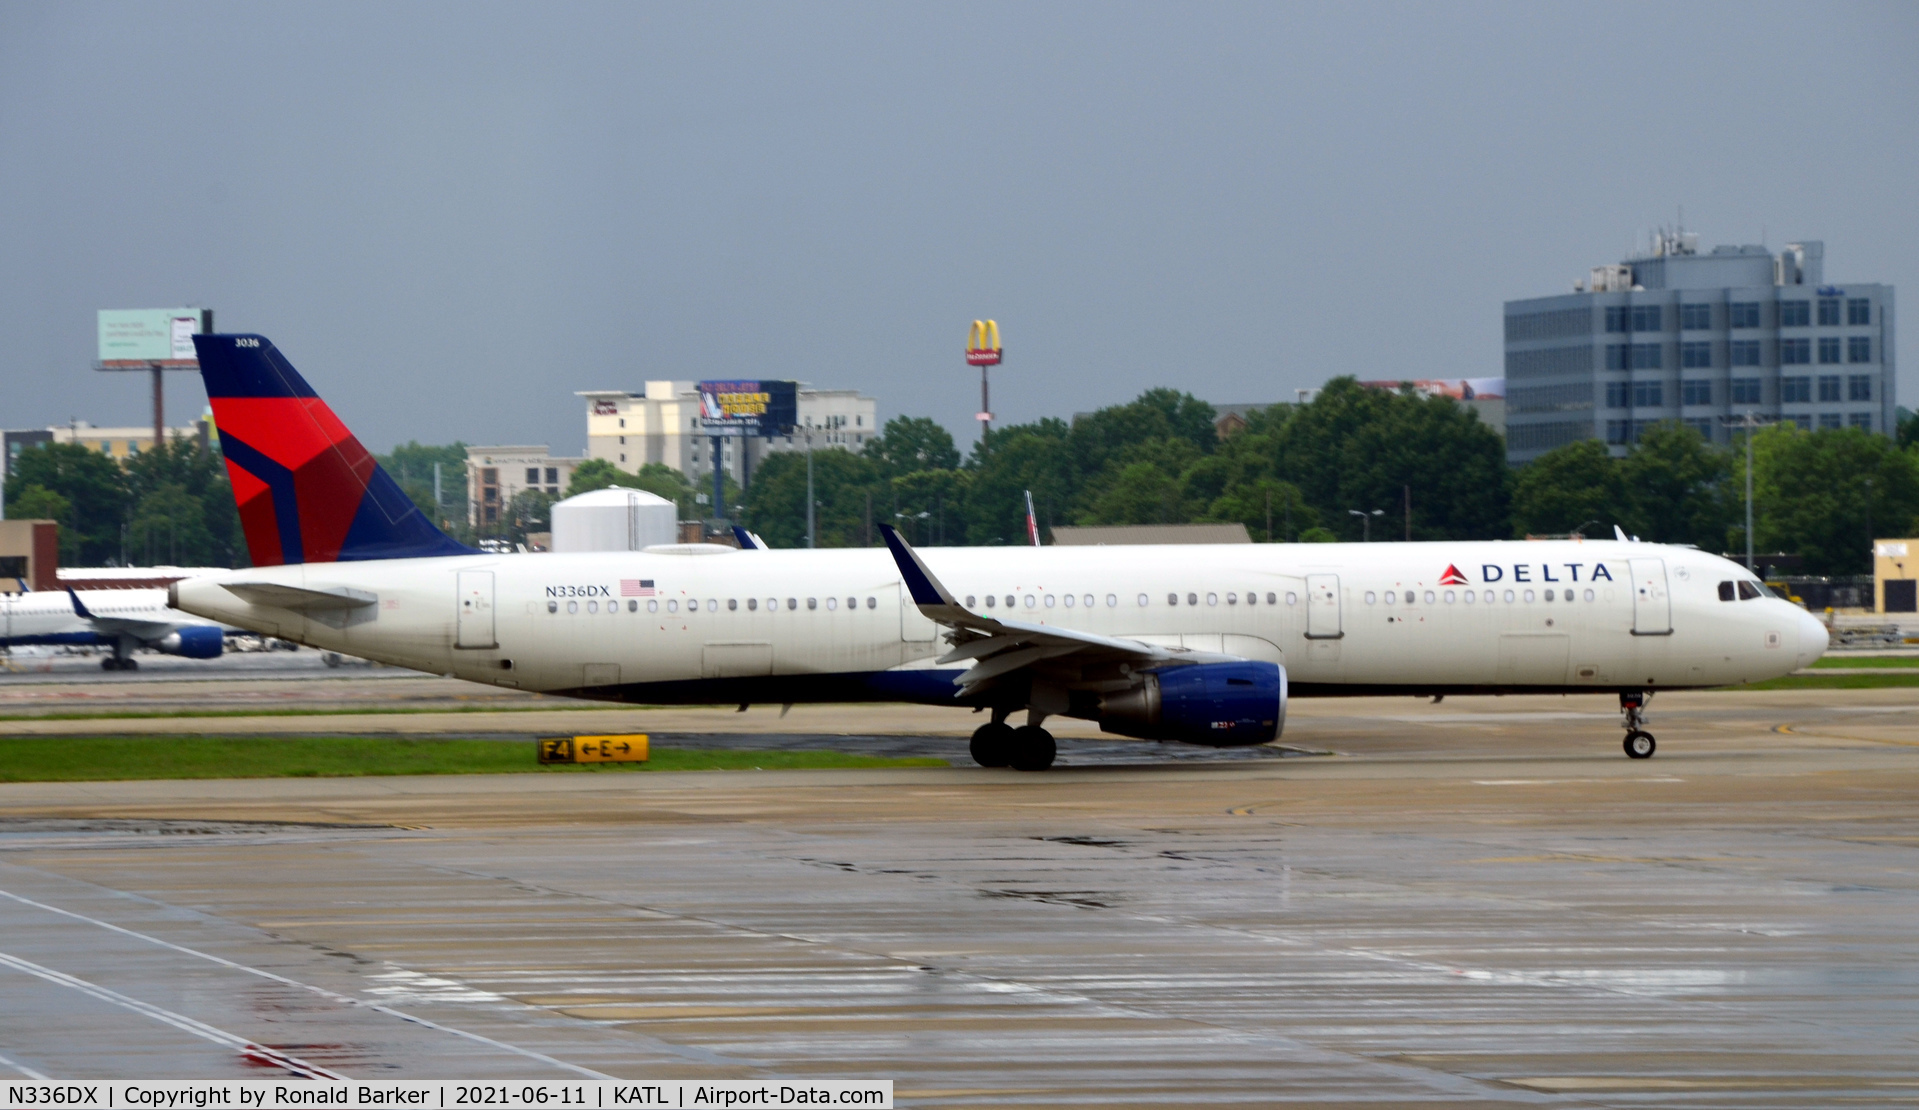 N336DX, 2018 Airbus A321-211 C/N 8063, Taxi Atlanta